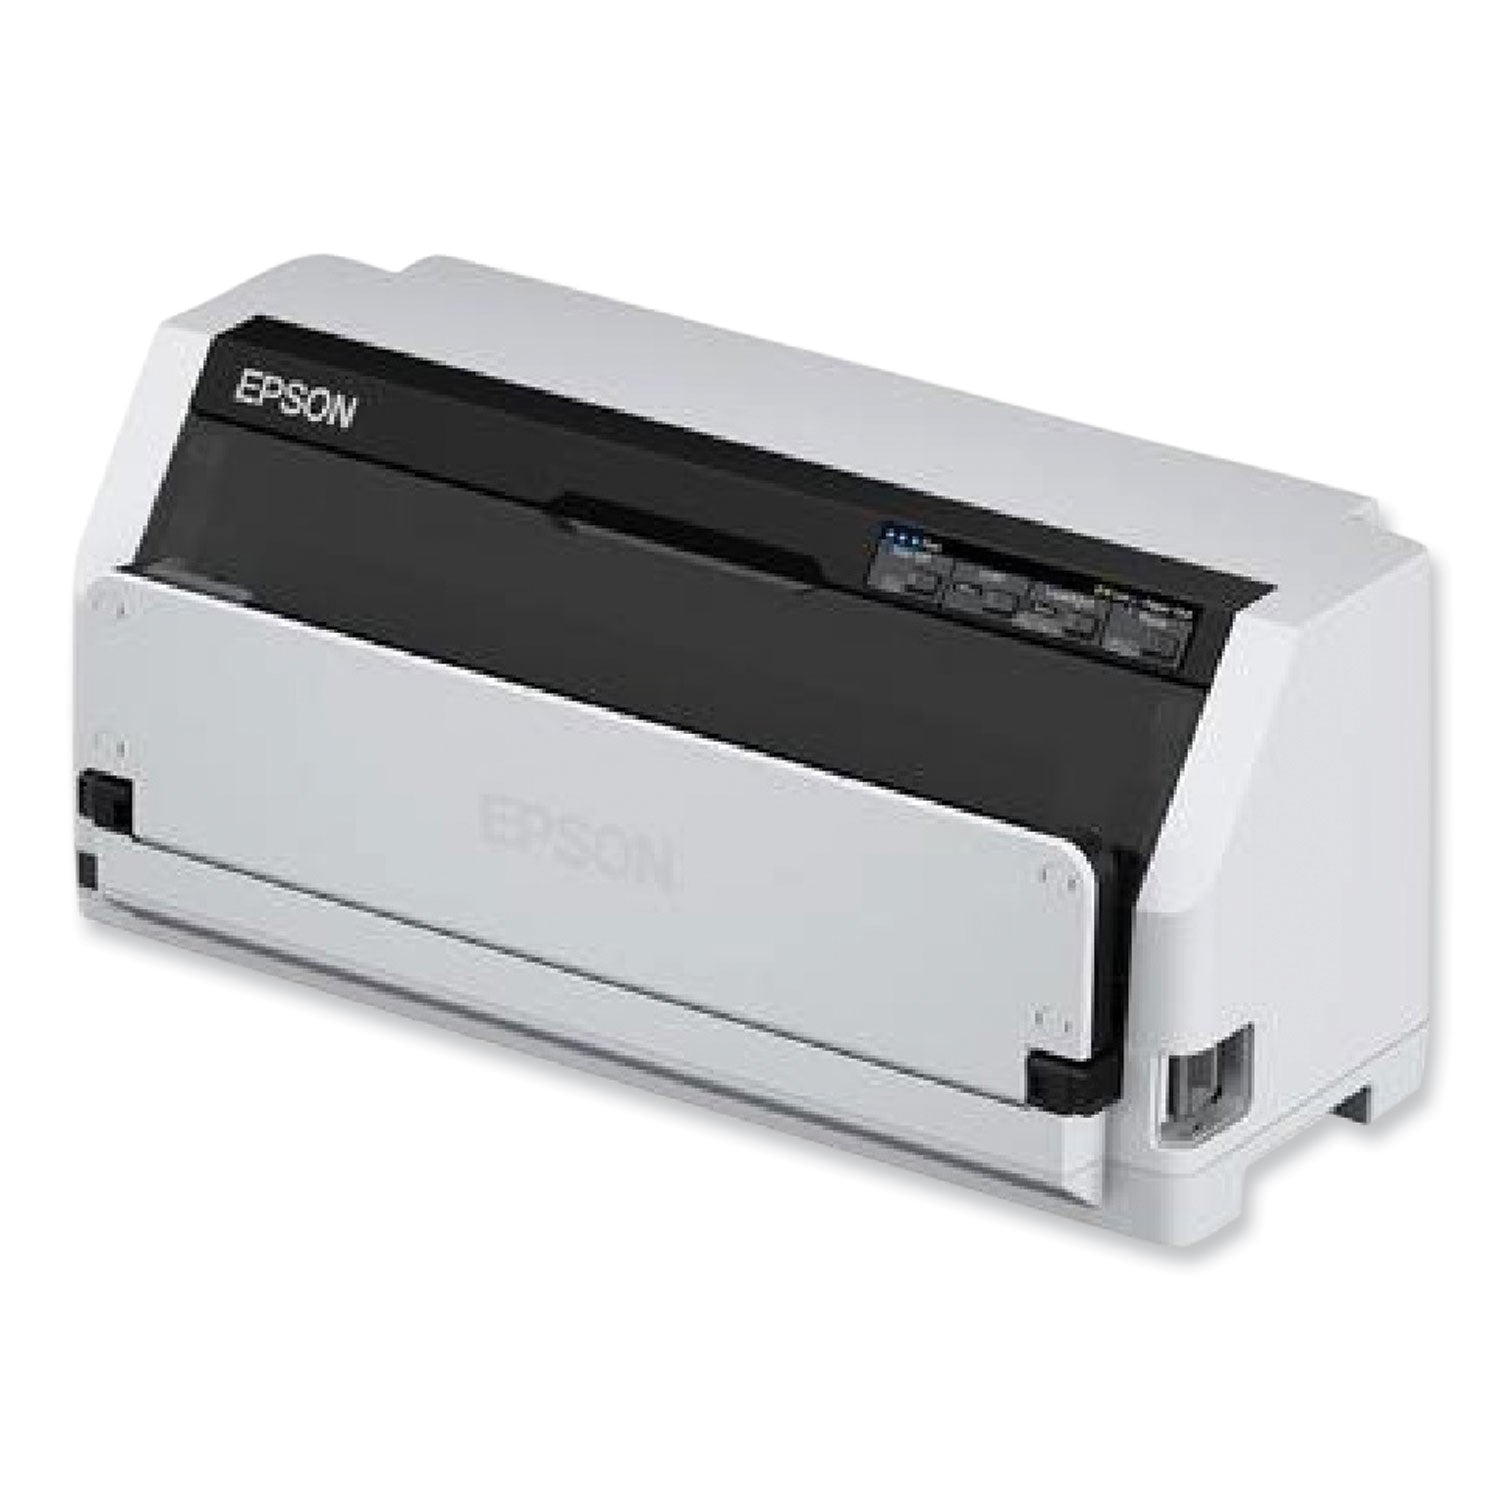 lq-780n-impact-printer_epsc11cj81202 - 3